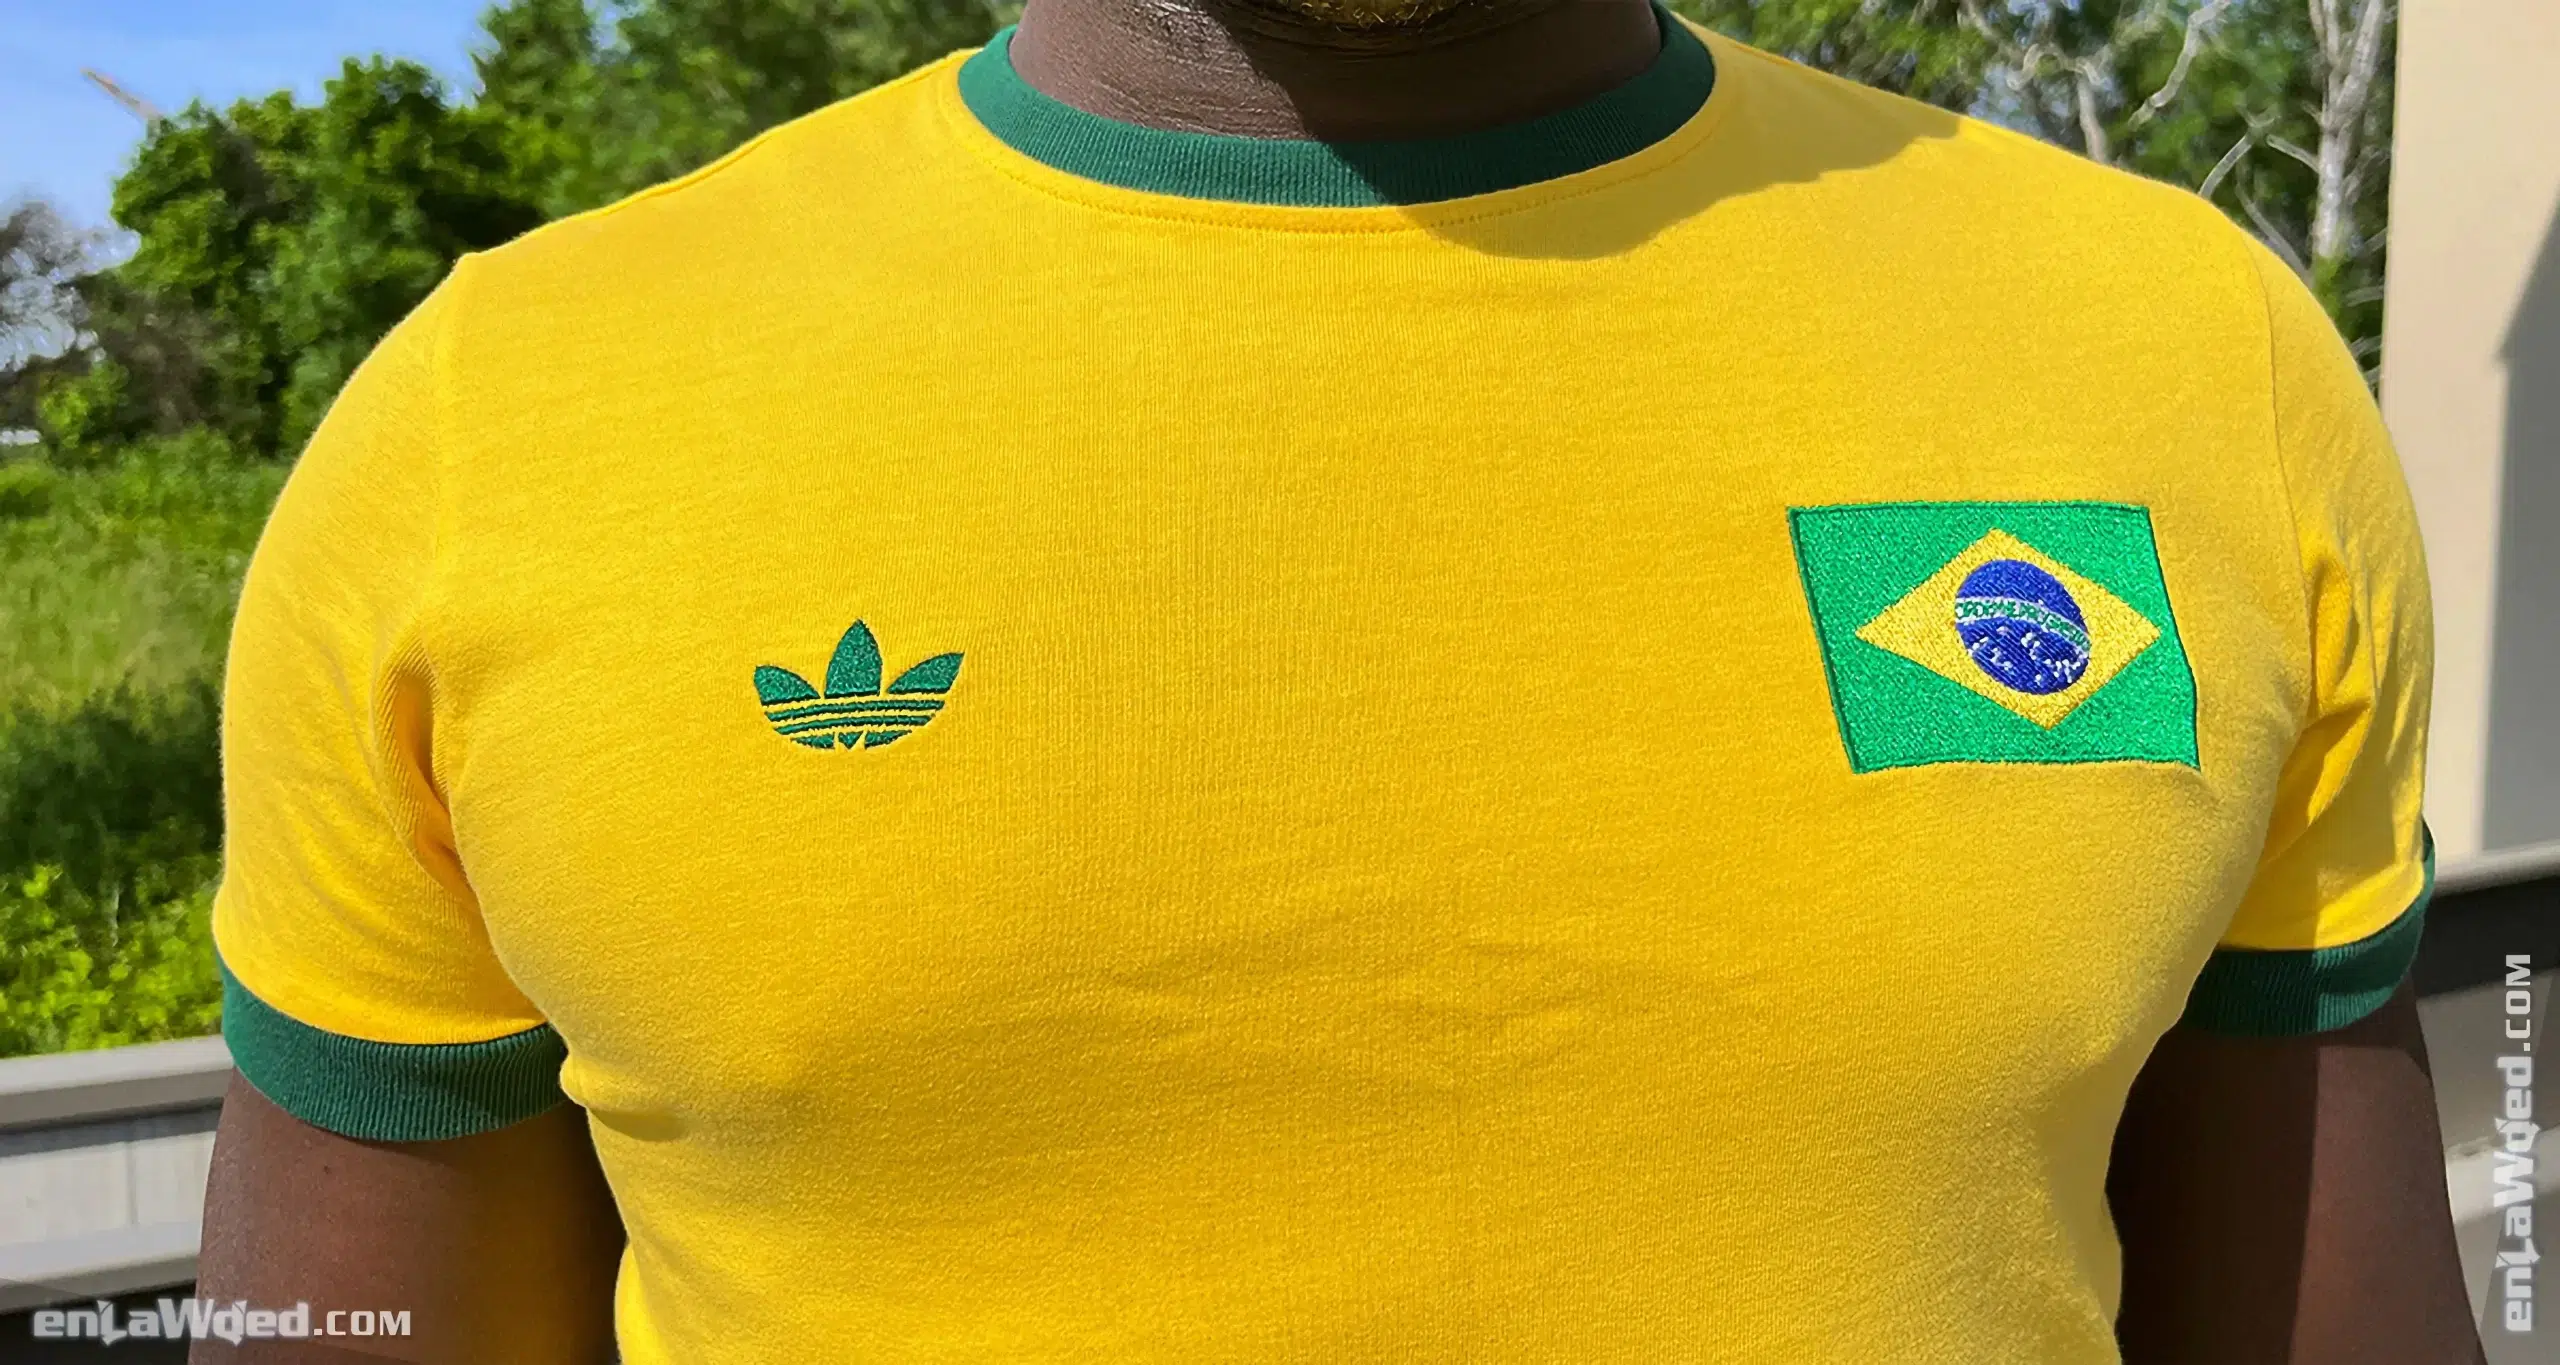 Men’s 2006 Brasil ’70 T-Shirt by Adidas Originals: Memorable (EnLawded.com file #lmchk90219ip2y123506kg9st)